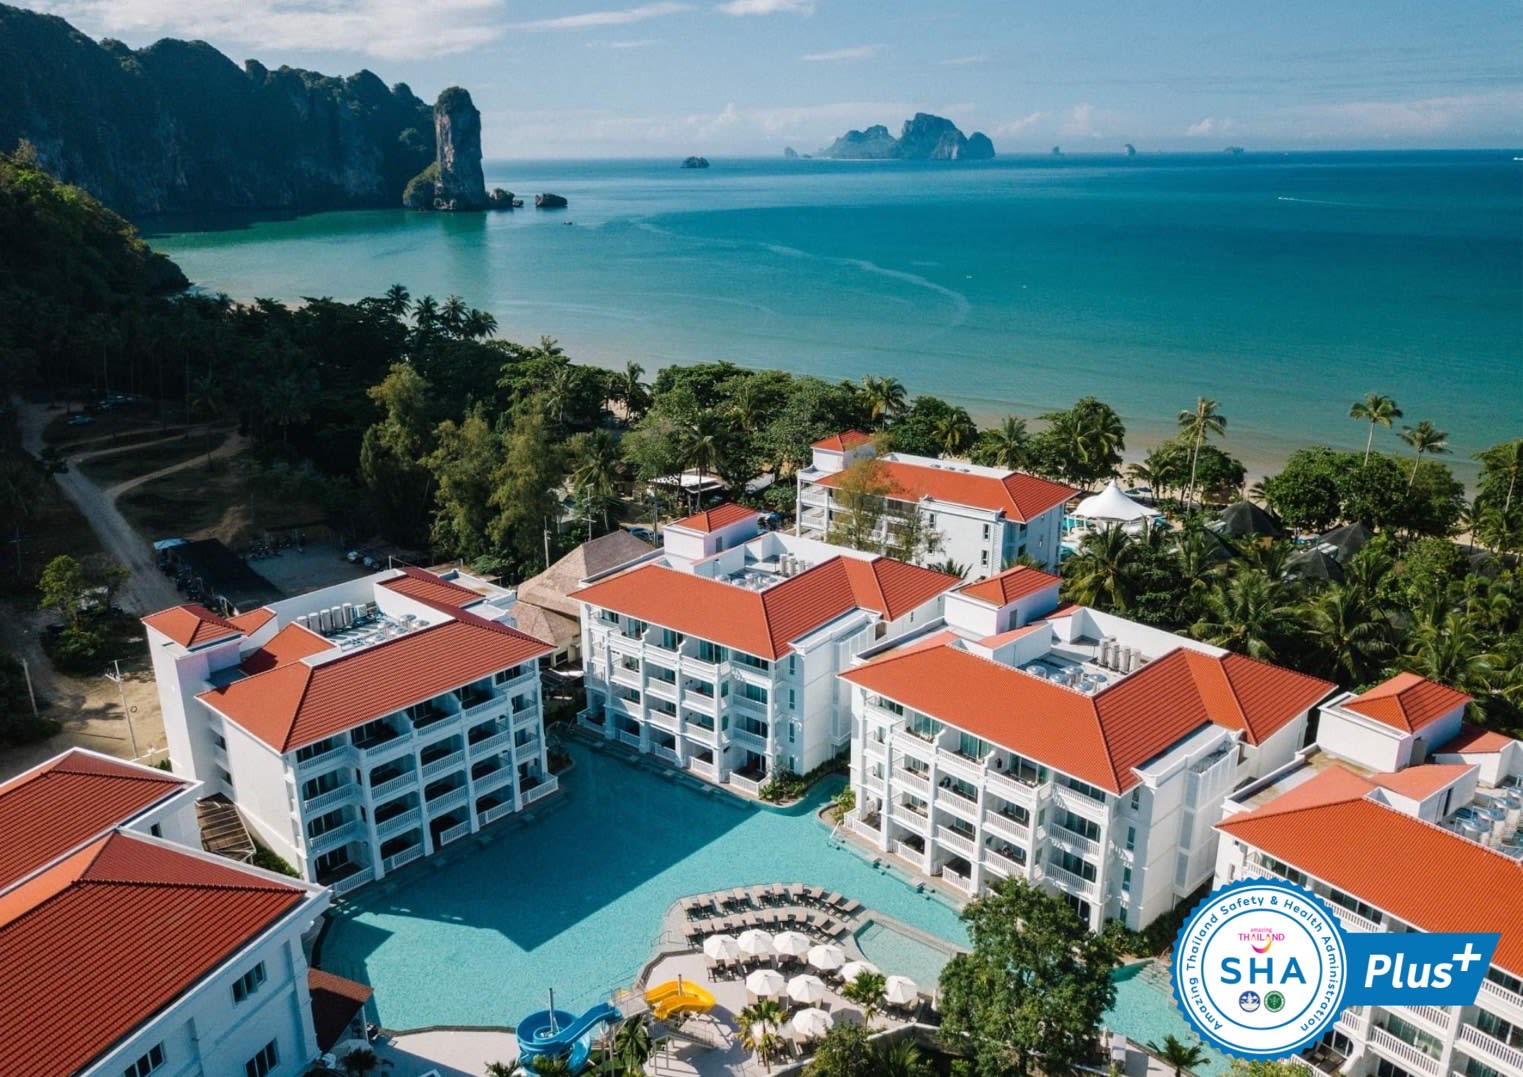 Centara Ao Nang Beach Resort & Spa Krabi (เซ็นทารา อ่าวนาง บีช รีสอร์ทและสปา กระบี่)